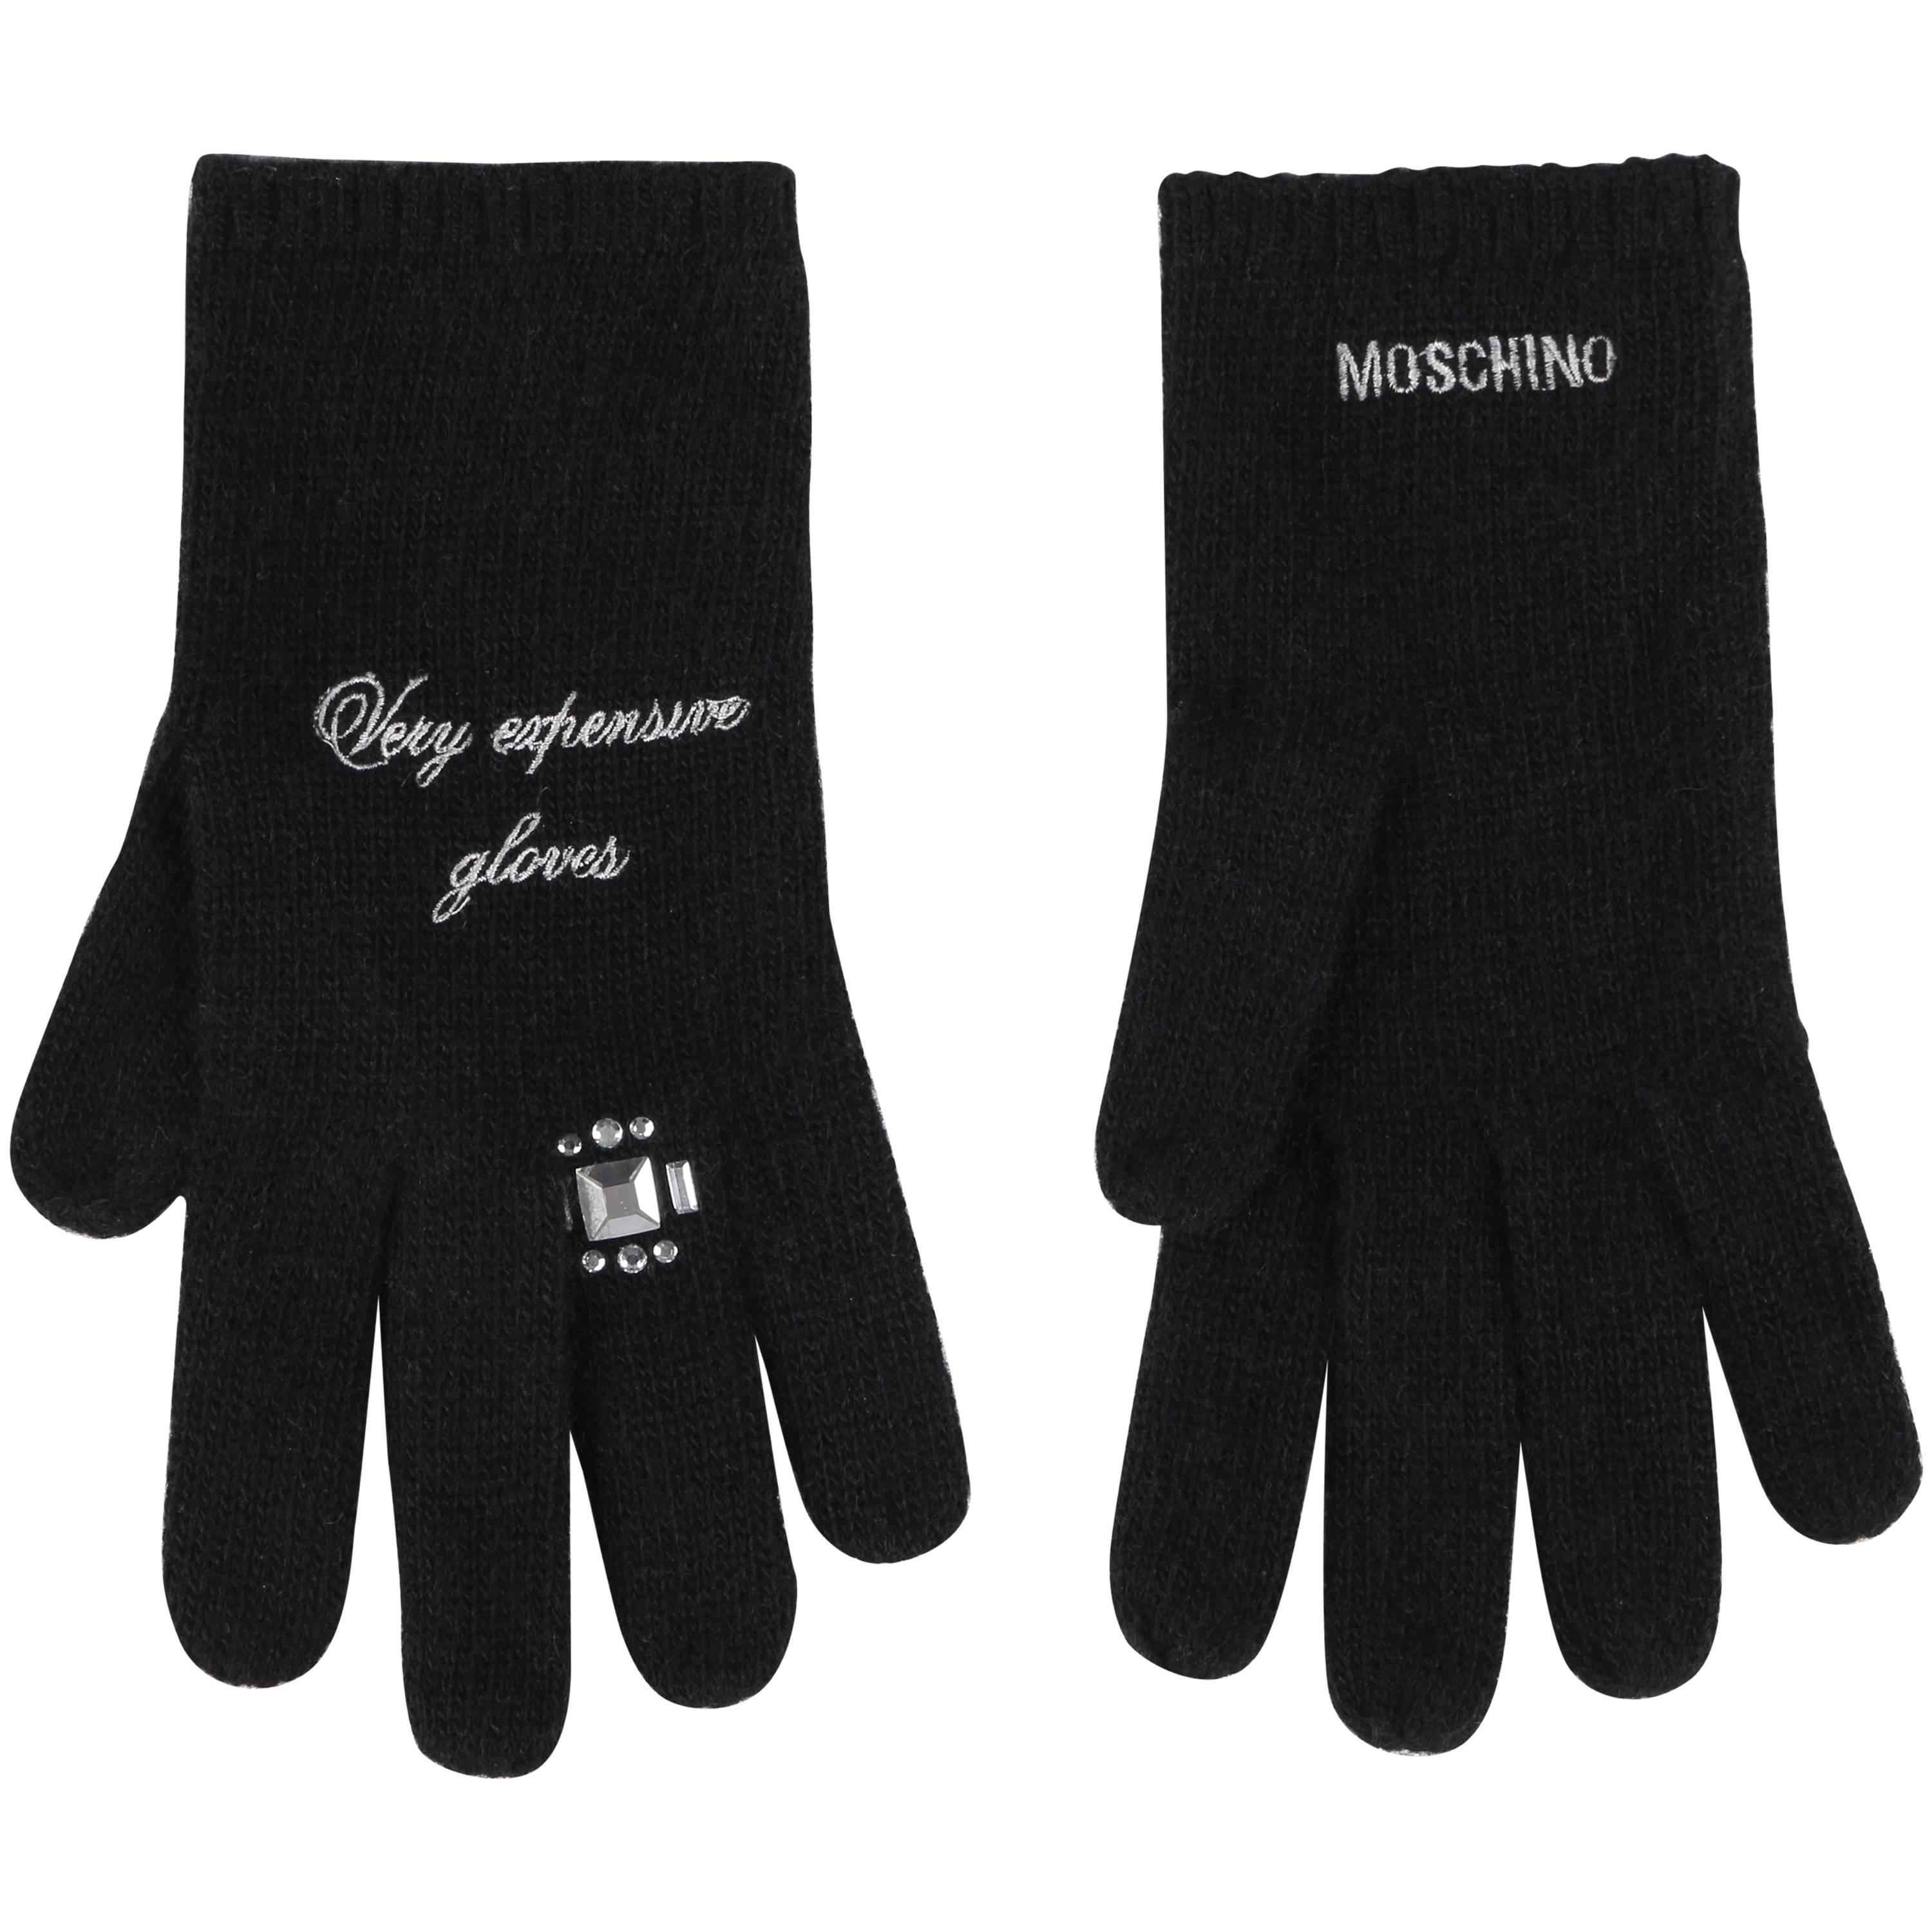 MOSCHINO "Very expensive gloves" Black Rhinestone 100% Cashmere Gloves